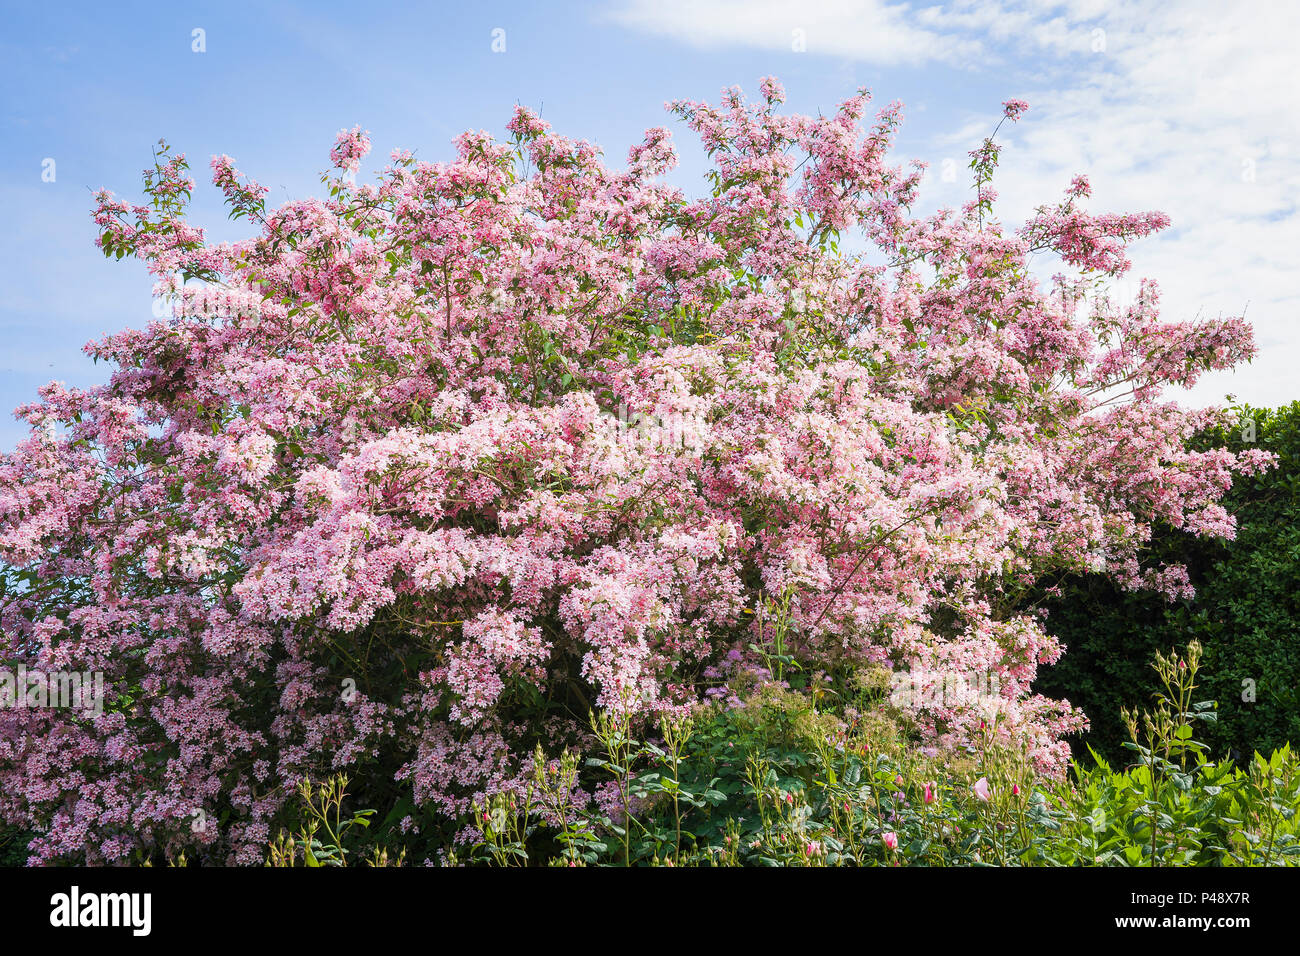 Pink flowering tree Kolkwitzia amabilis Pink Cloud in an English garden in June Stock Photo